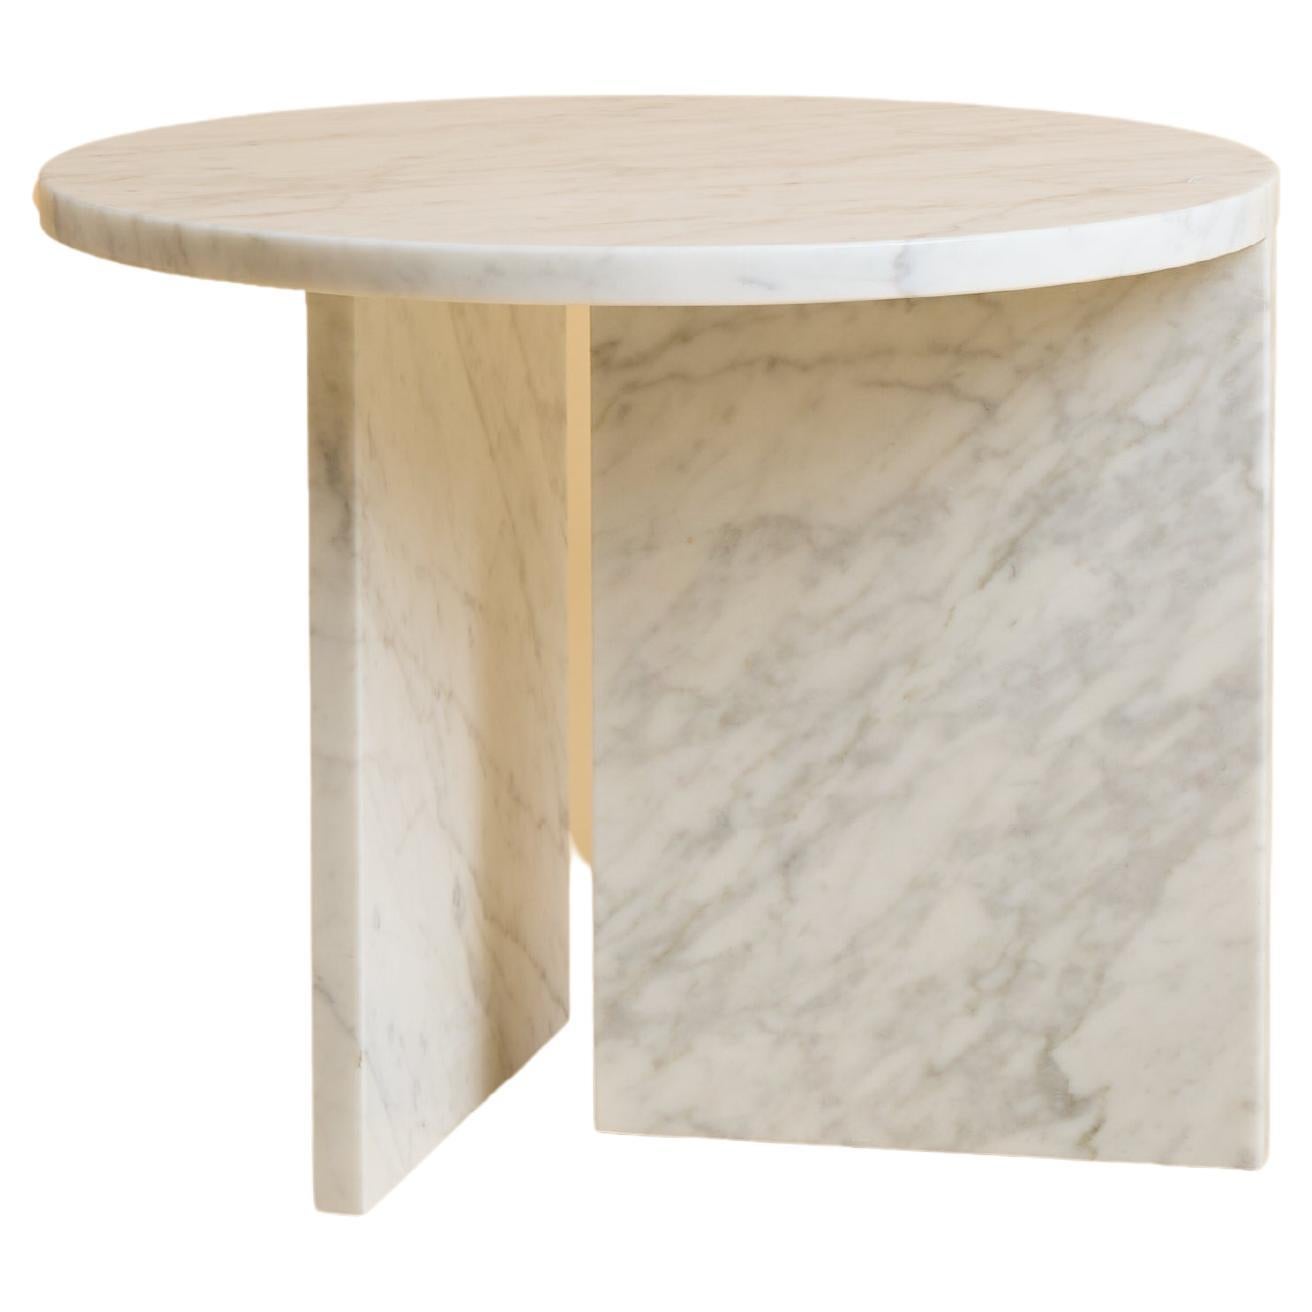 Carrara Marble Circular Coffee Table, Made in Italy